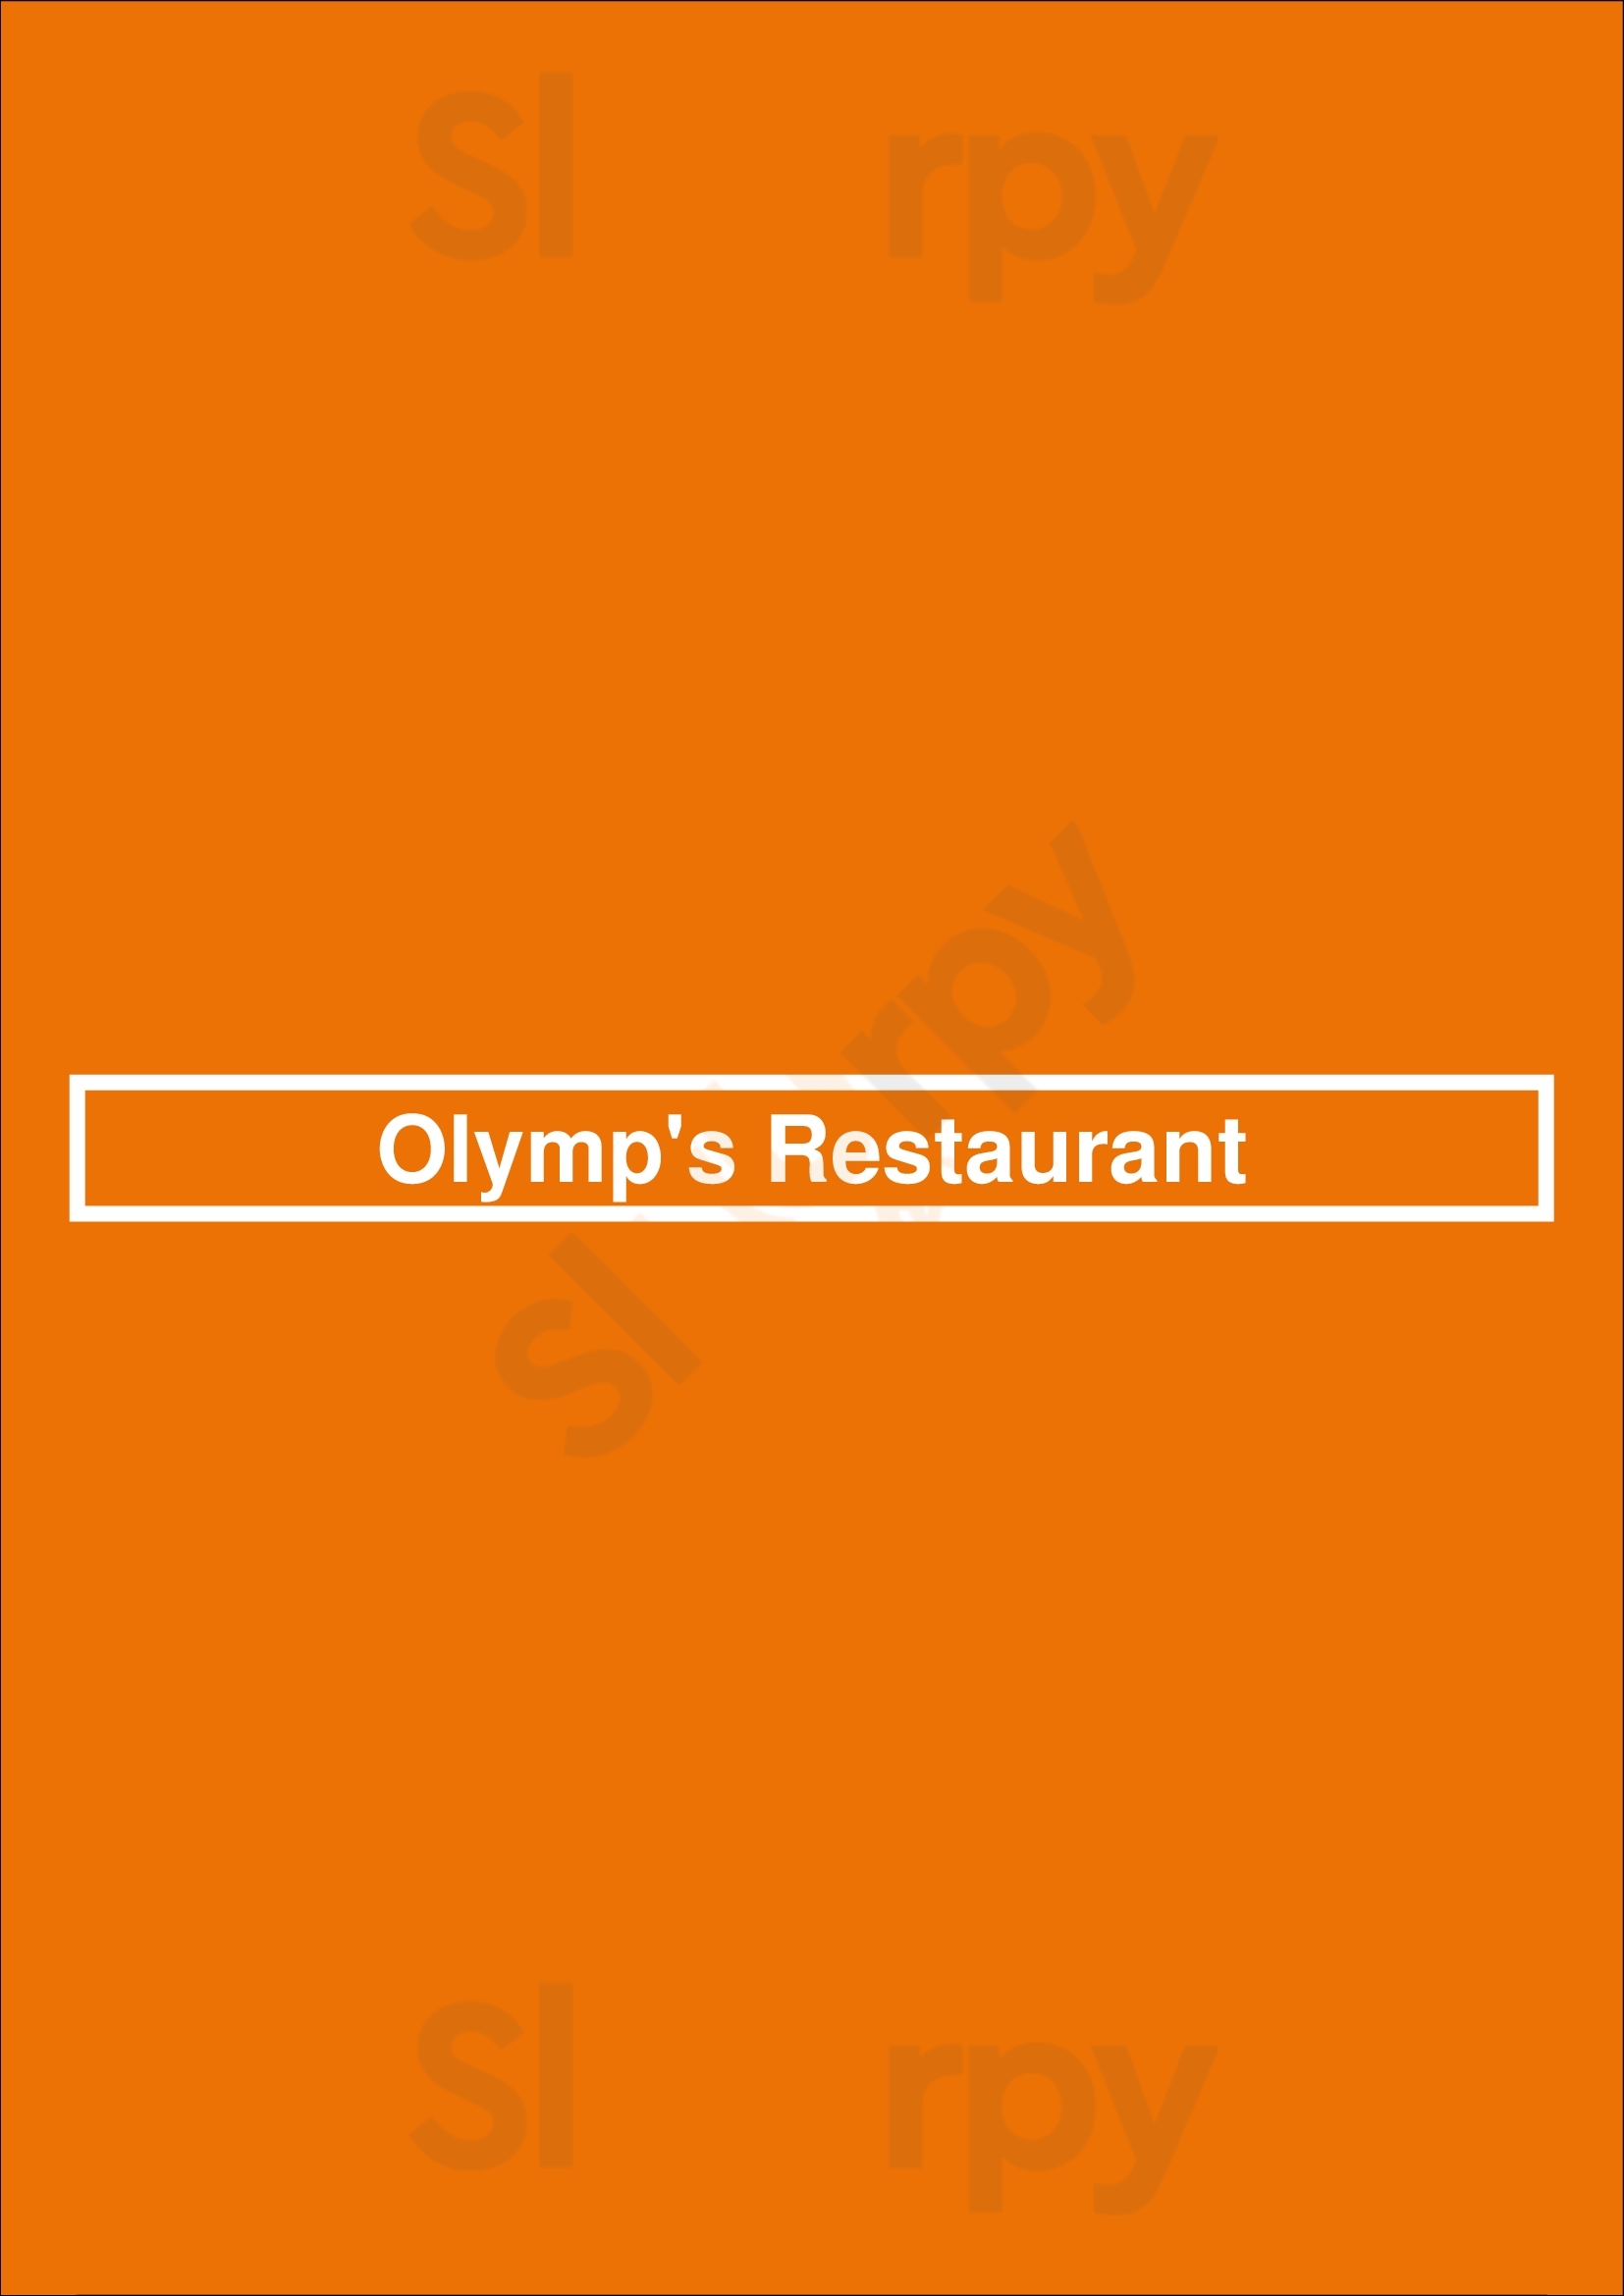 Olymp's Restaurant Eching Menu - 1